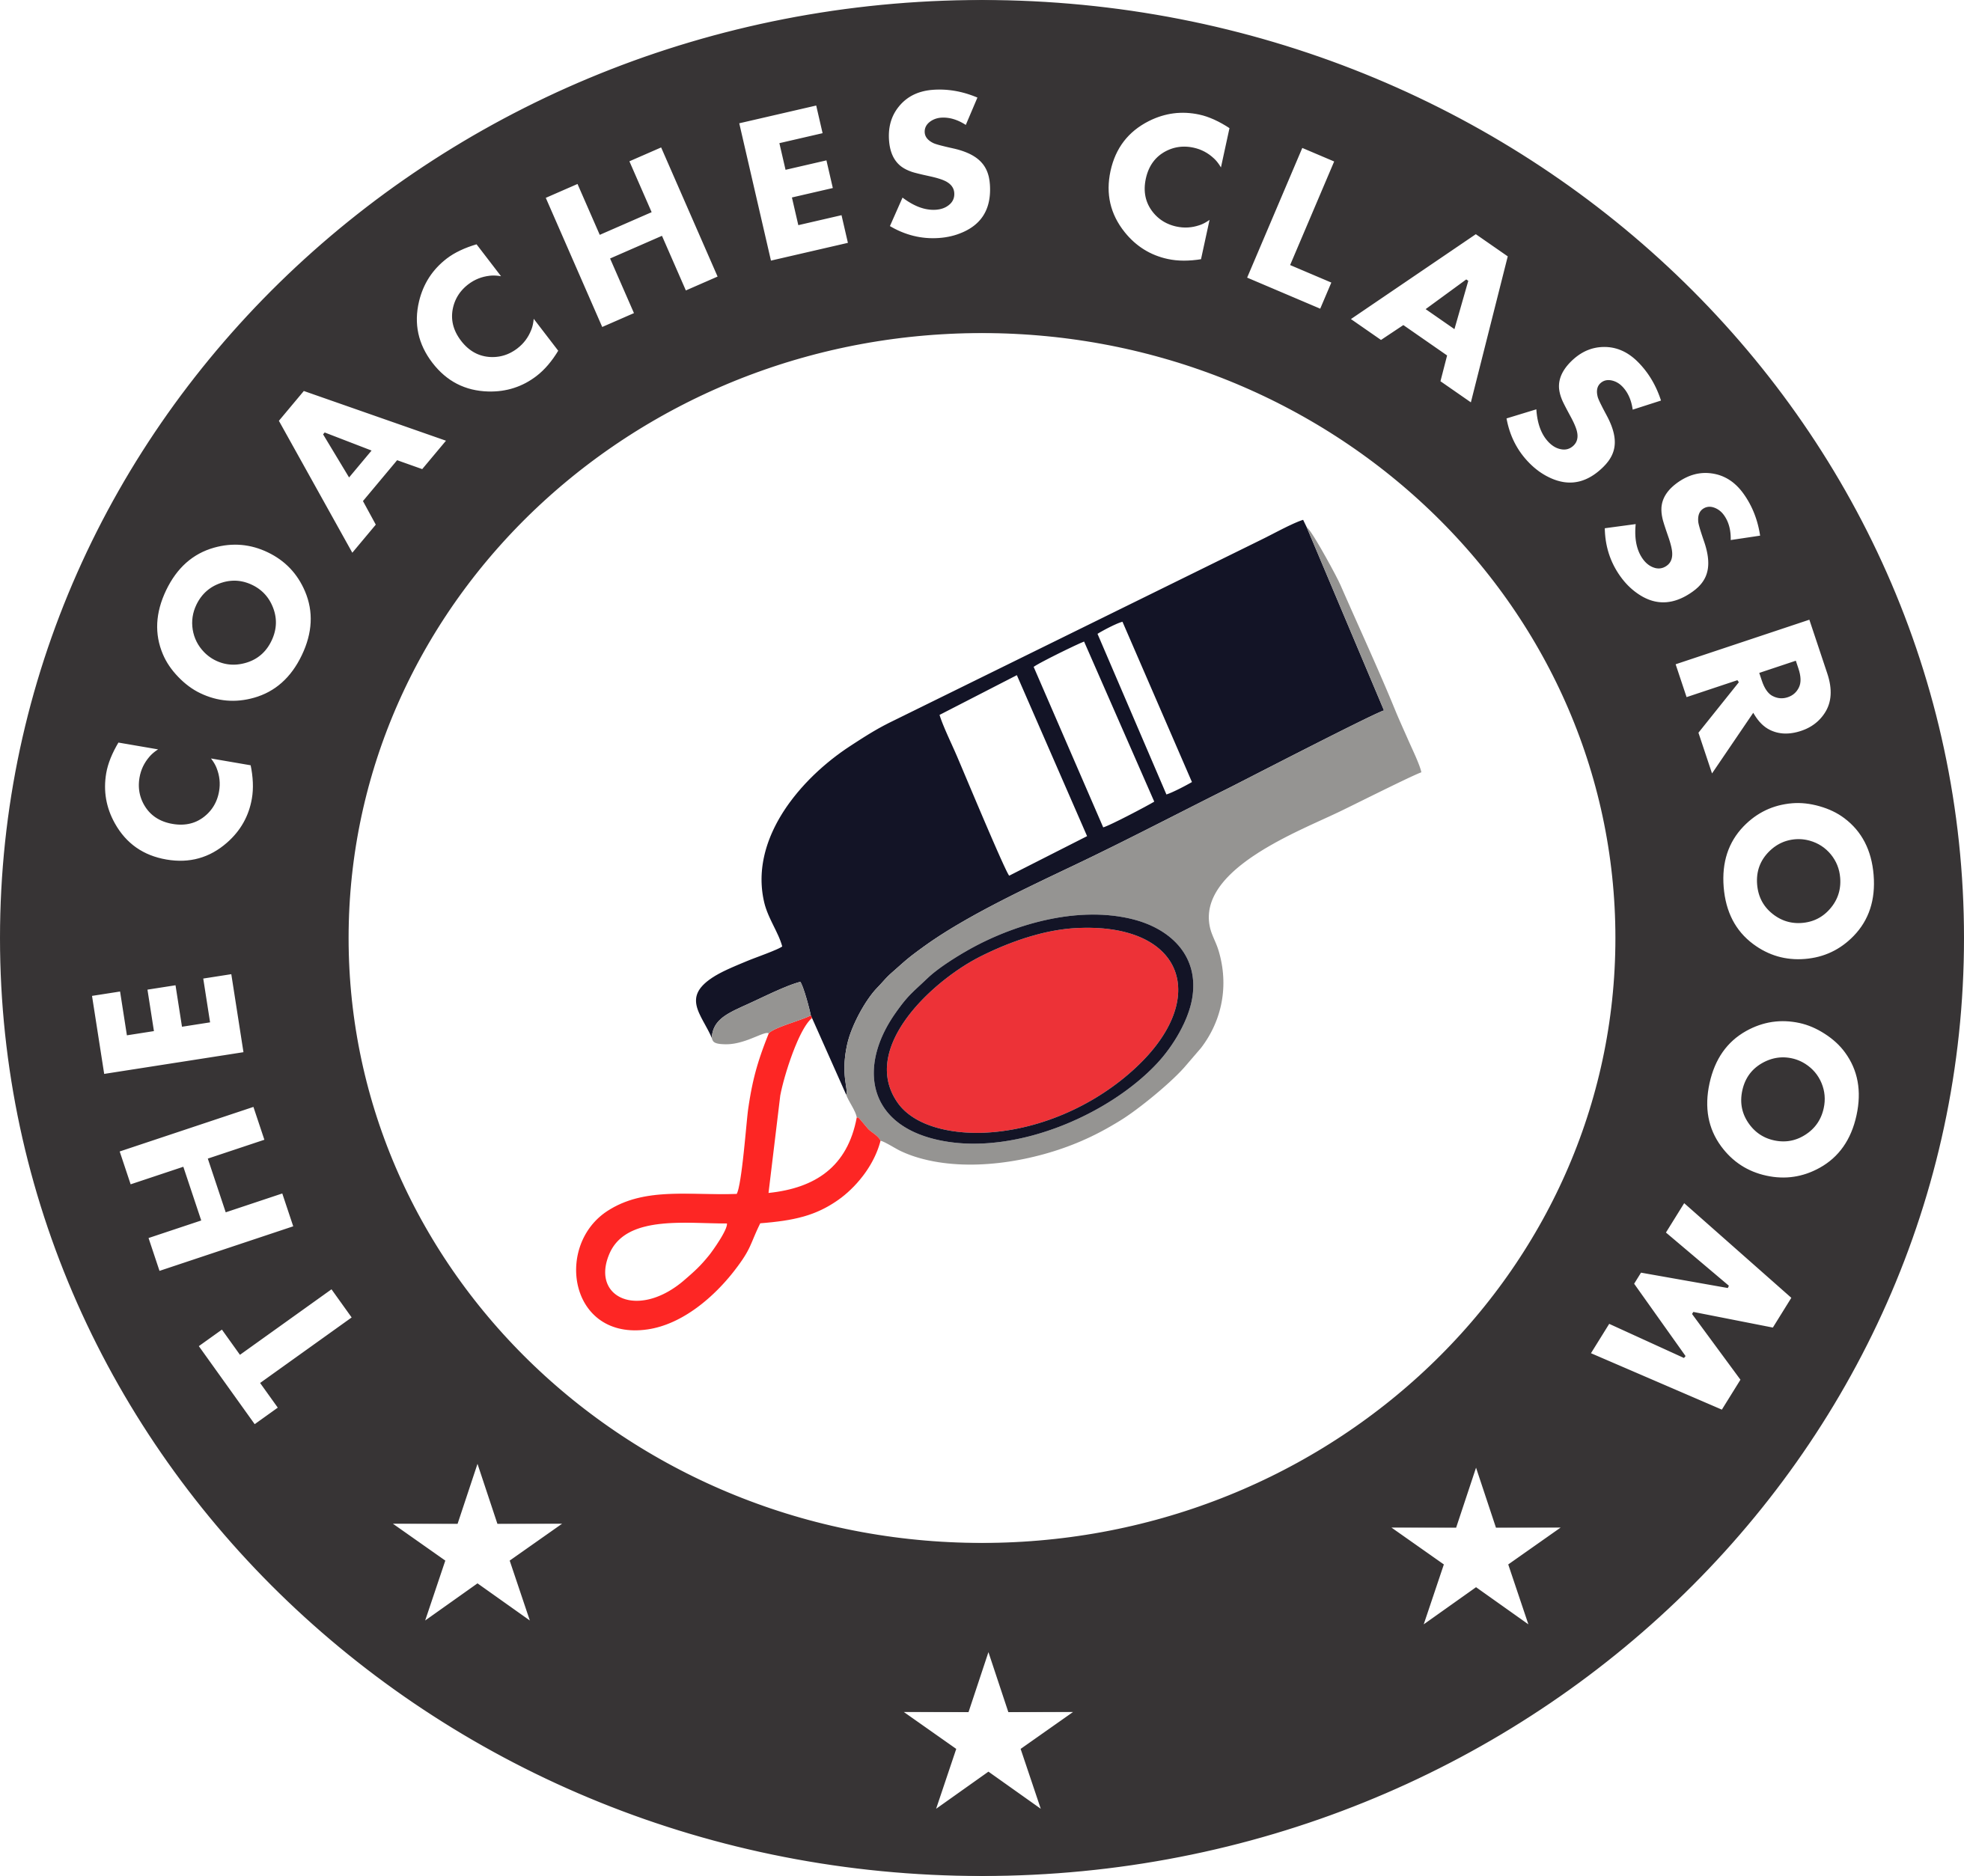 The Coaches Classroom